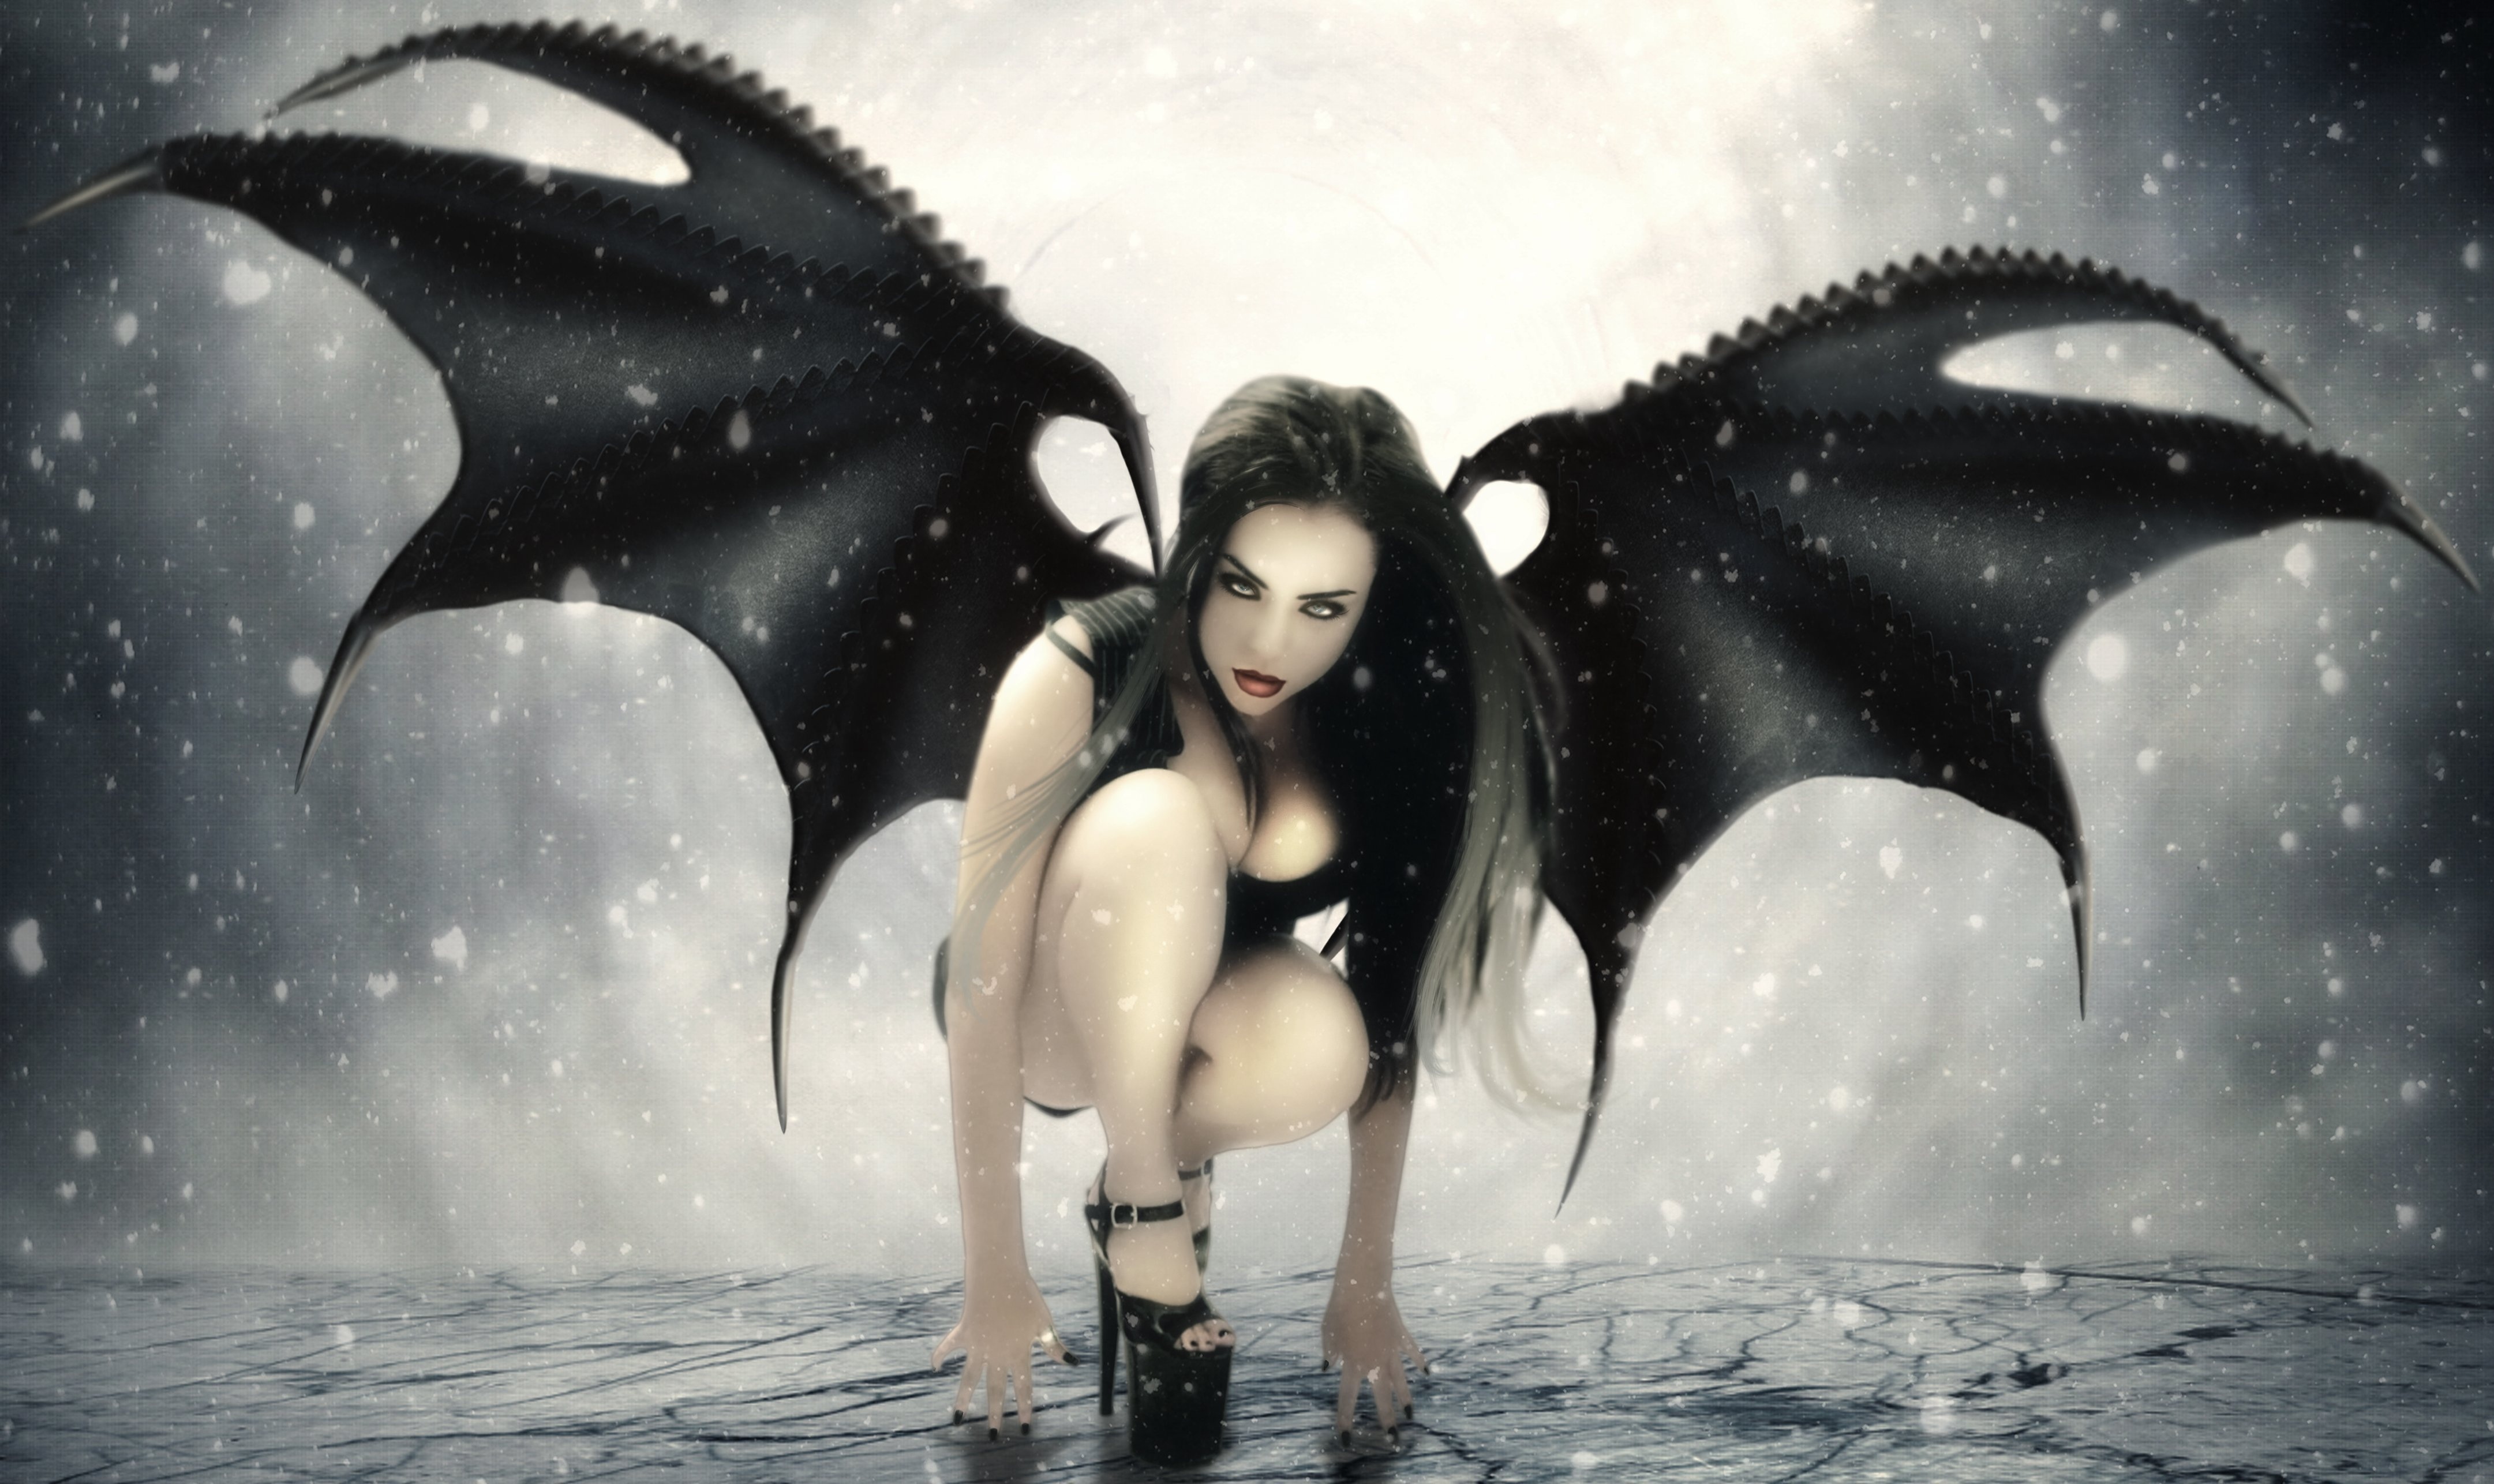  gelinas black fantasy wings girl demon gothic dark fantasy wallpaper